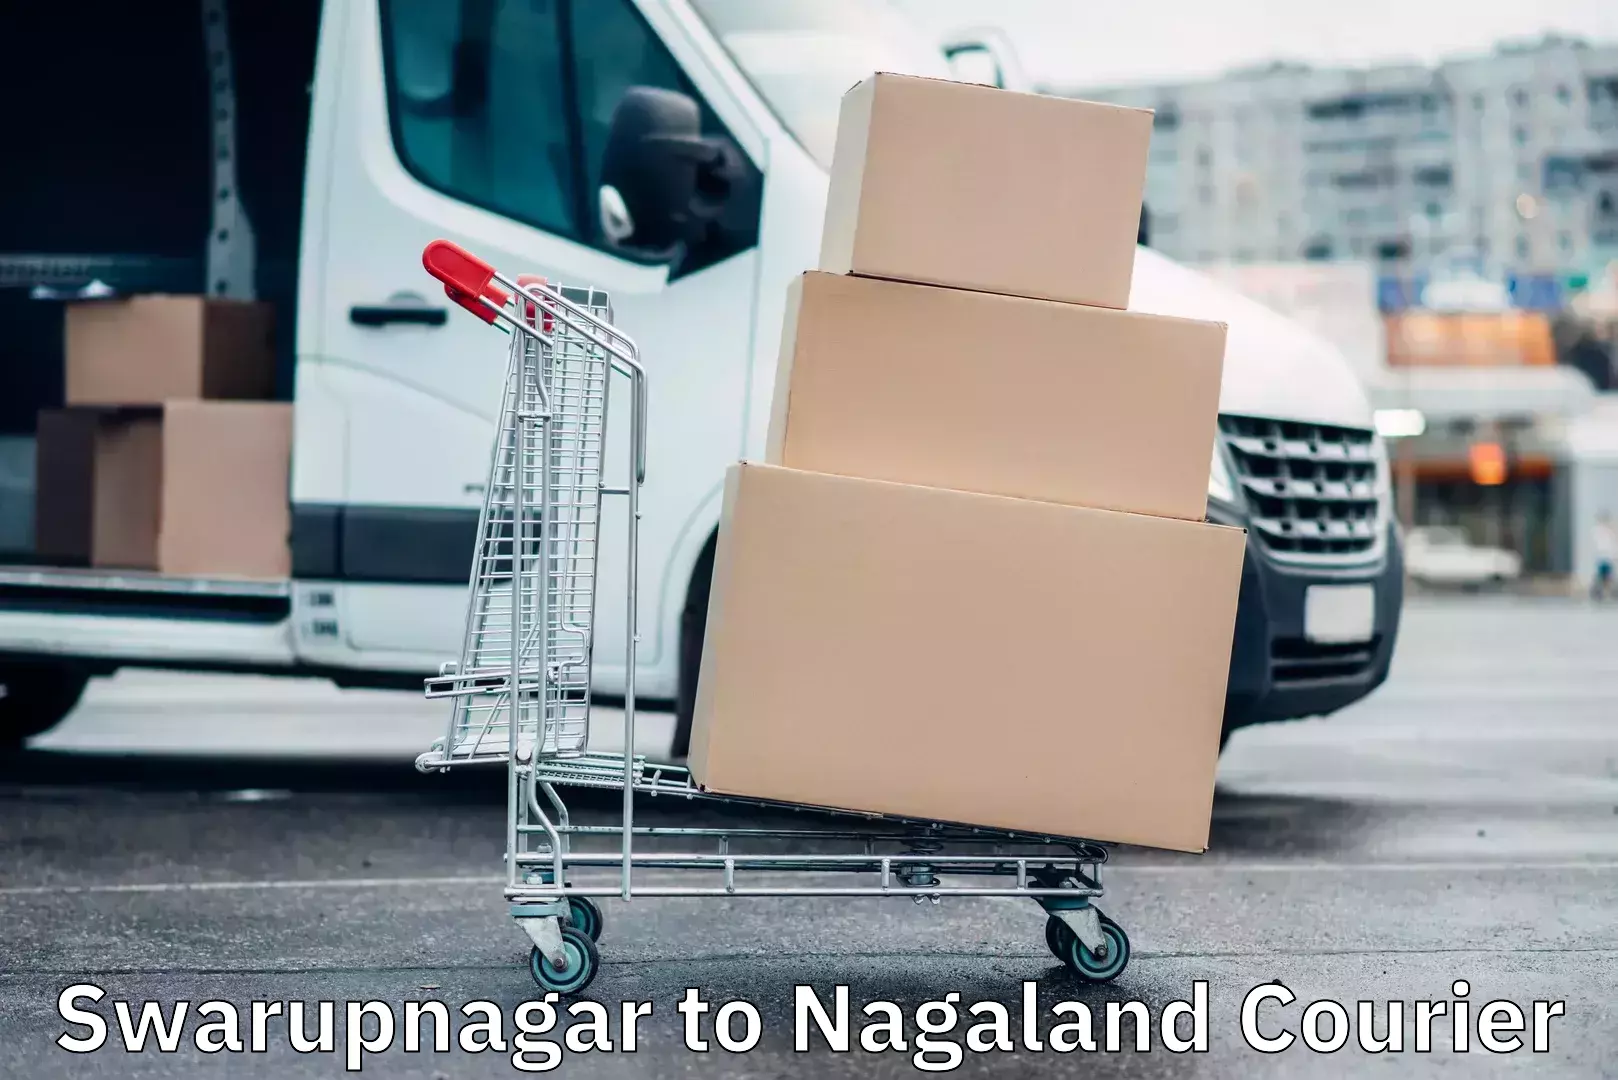 Cash on delivery service Swarupnagar to Nagaland